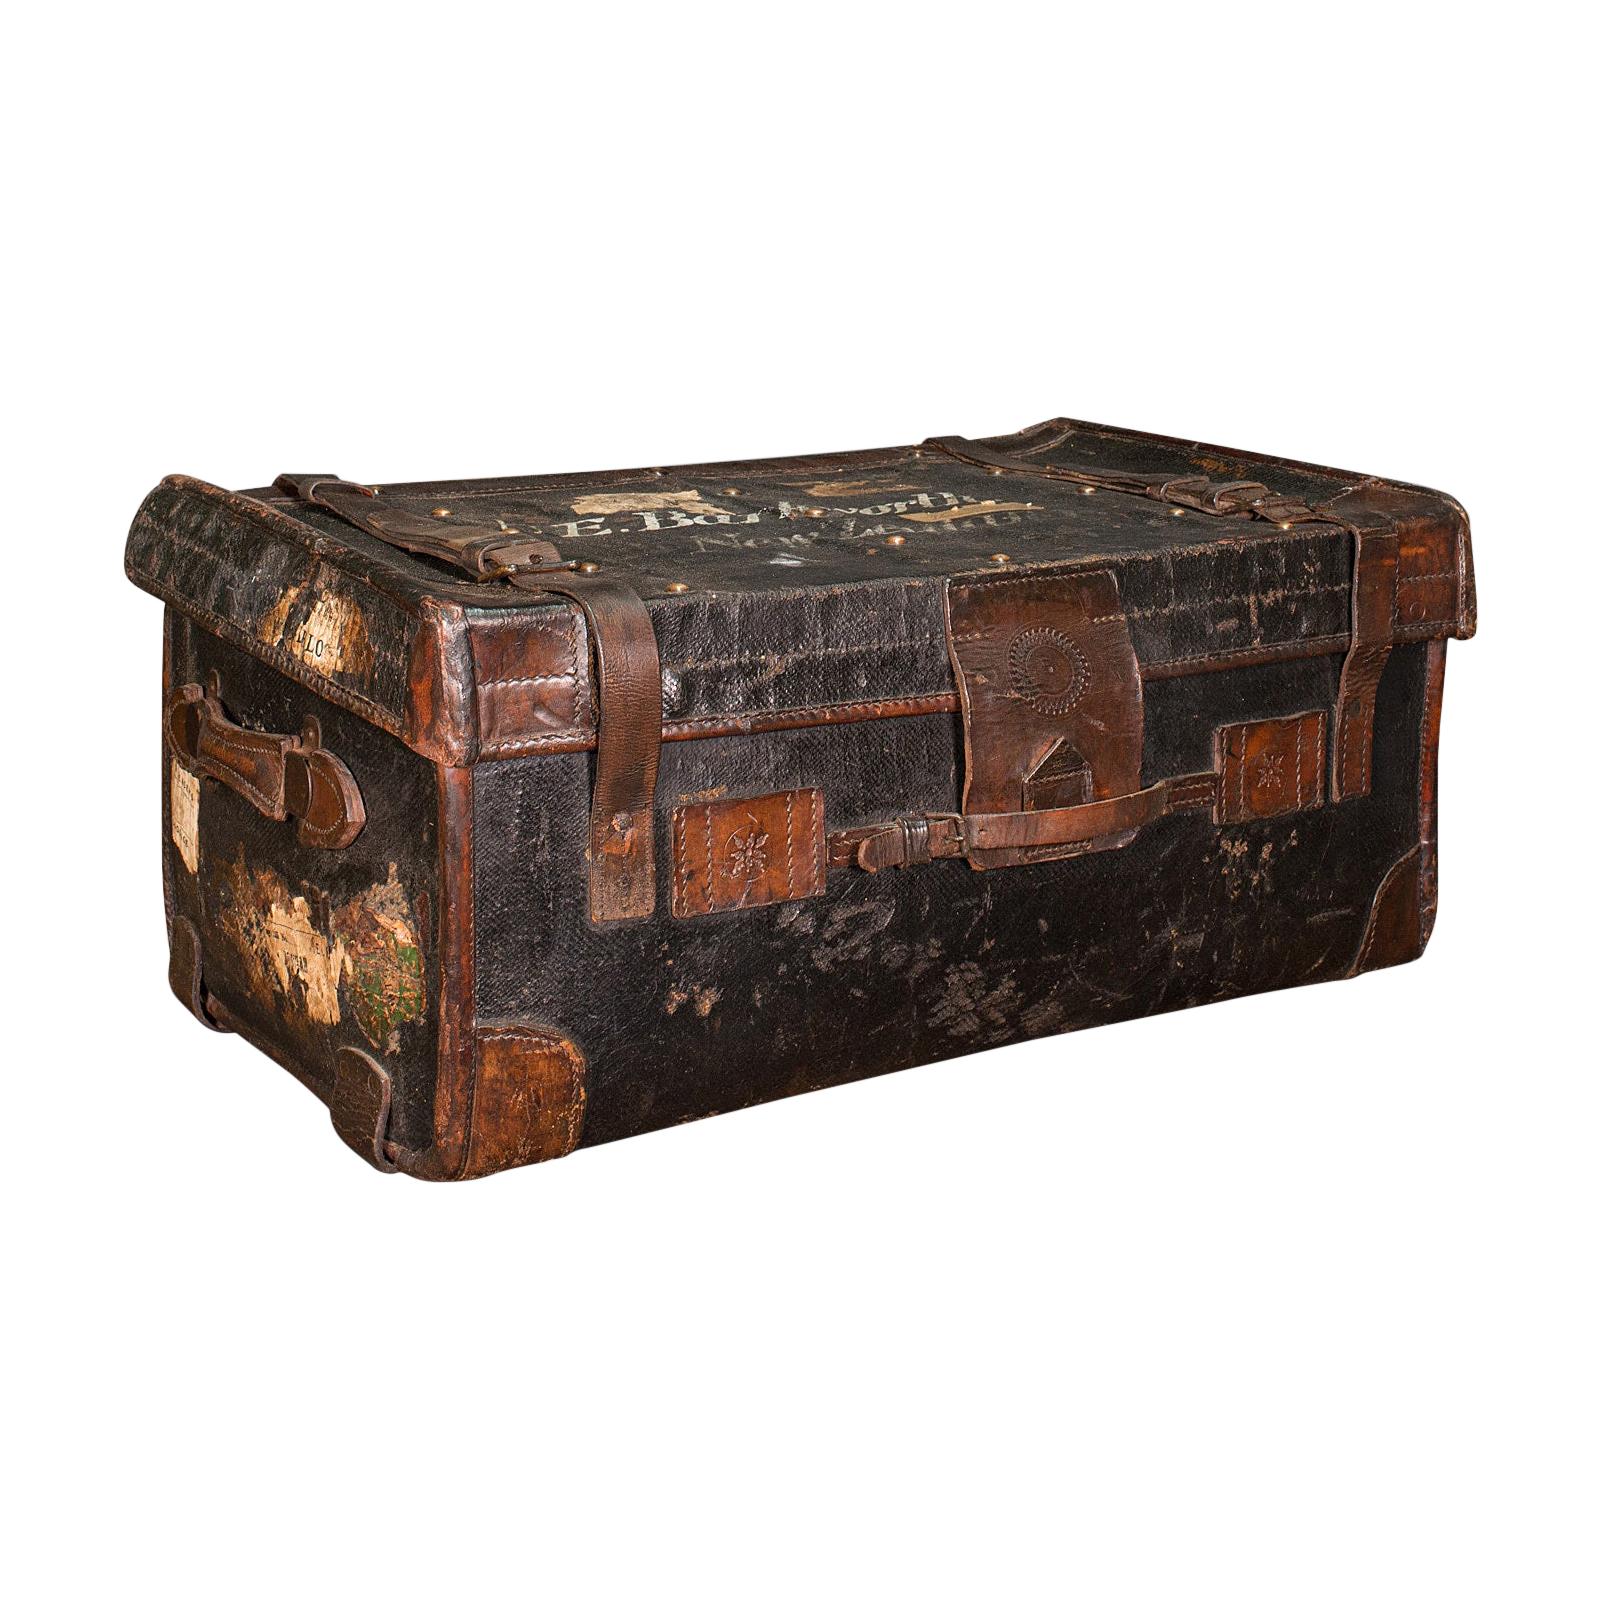 Vintage Overseas Voyage Trunk, English, Leather, Travel Case, Luggage, C.1930